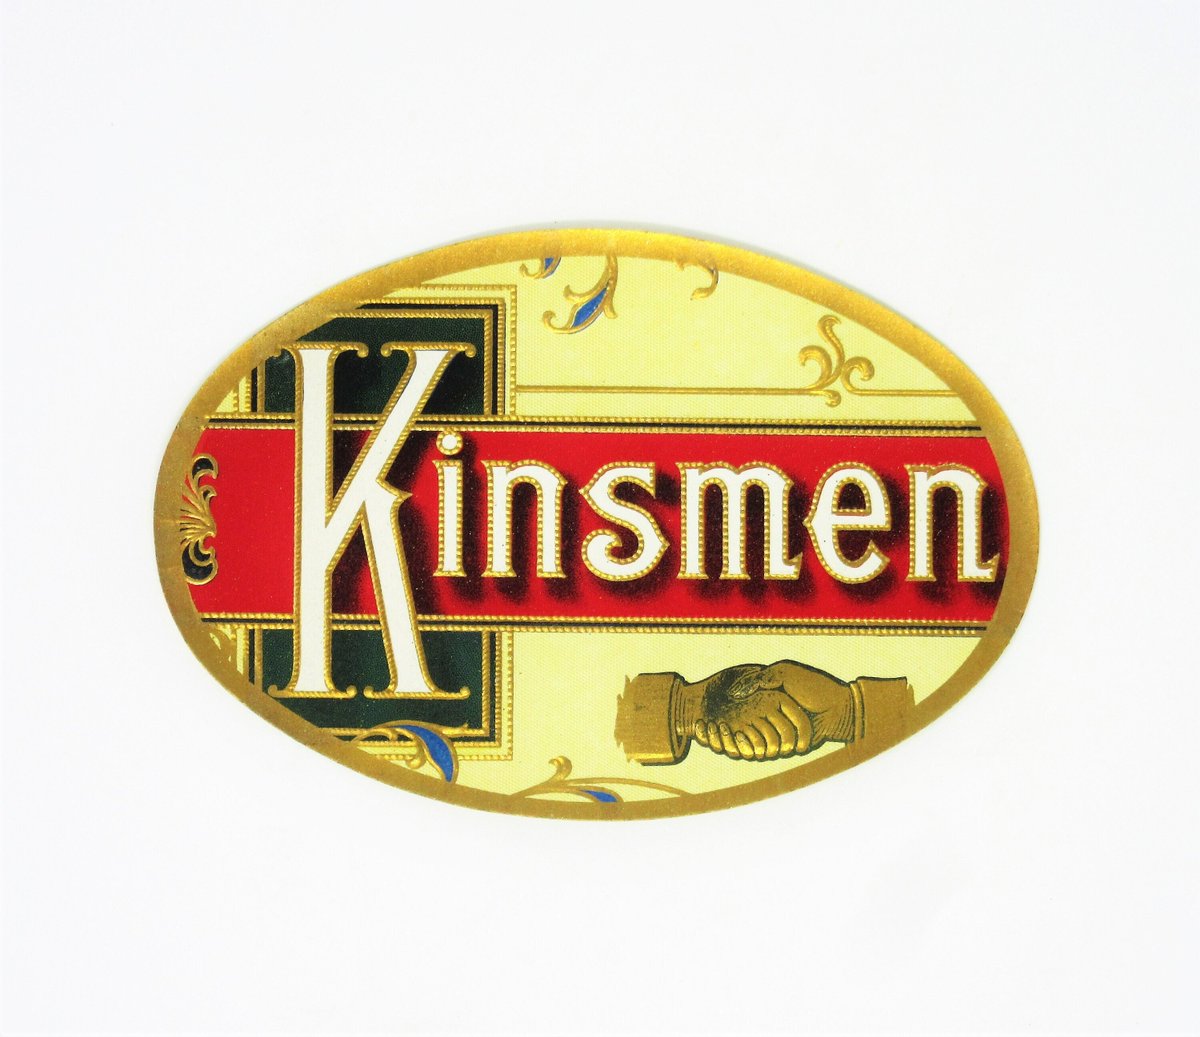 Vintage Kinsmen Brand Cigar Box Label Featuring Embossed Shiny Lettering Gold Border, Junk Journals, Decoupage Scrapbook Ephemera Tobacciana tuppu.net/1e3193ce #etsyseller #vintage #Etsy #PaperEphemera